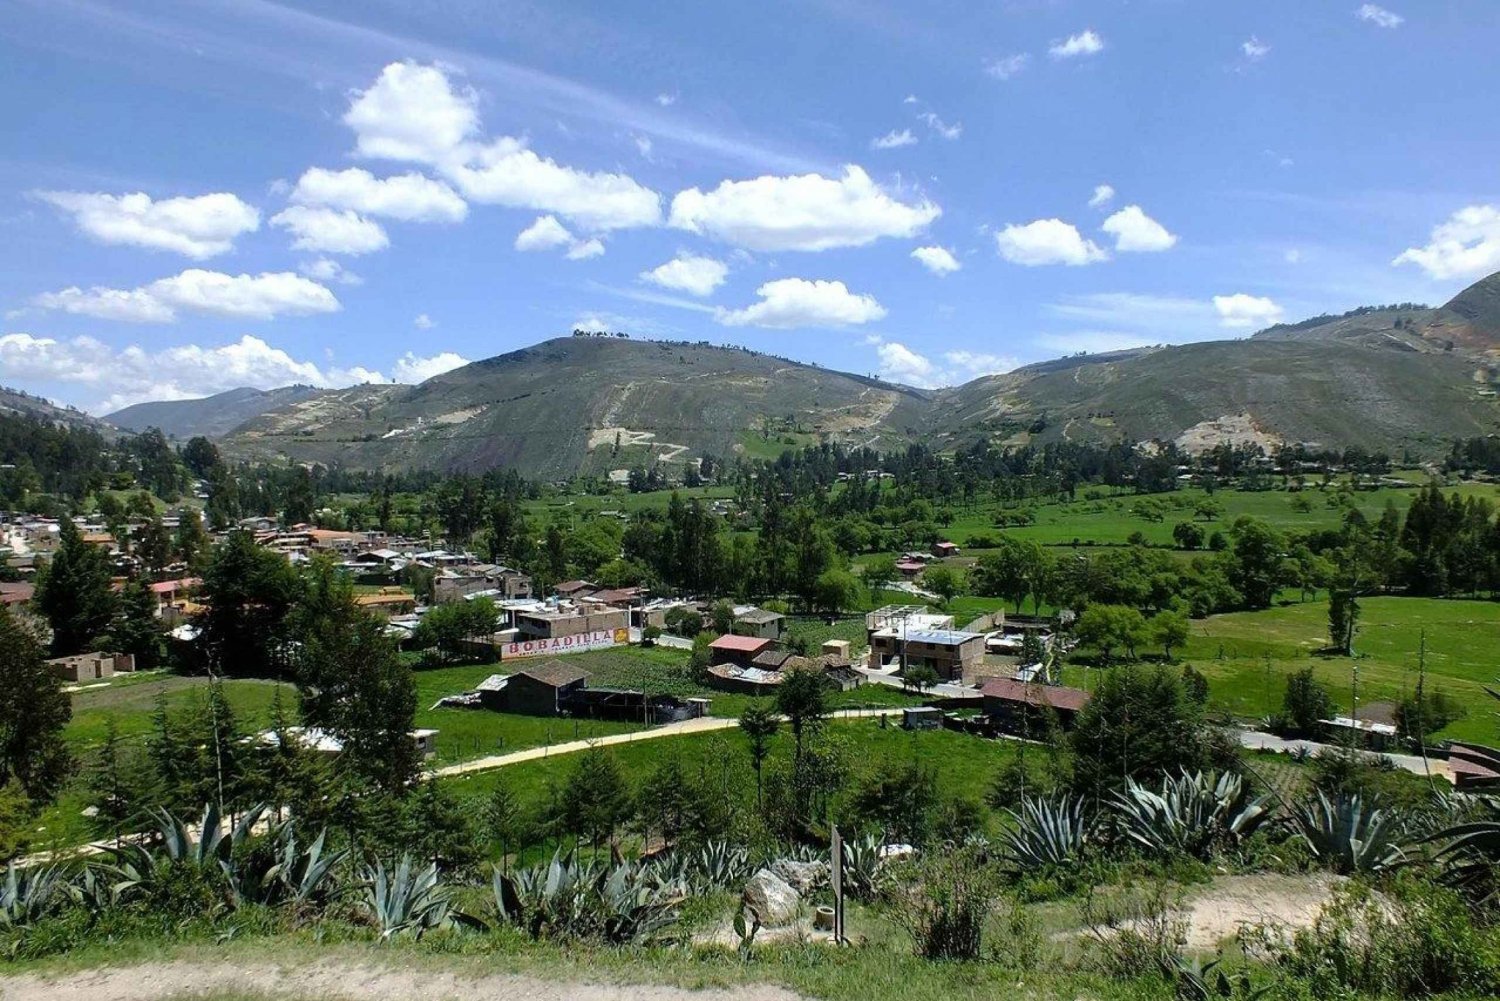 || Visite de la vallée de Cajamarca - lagune de San Nicolás